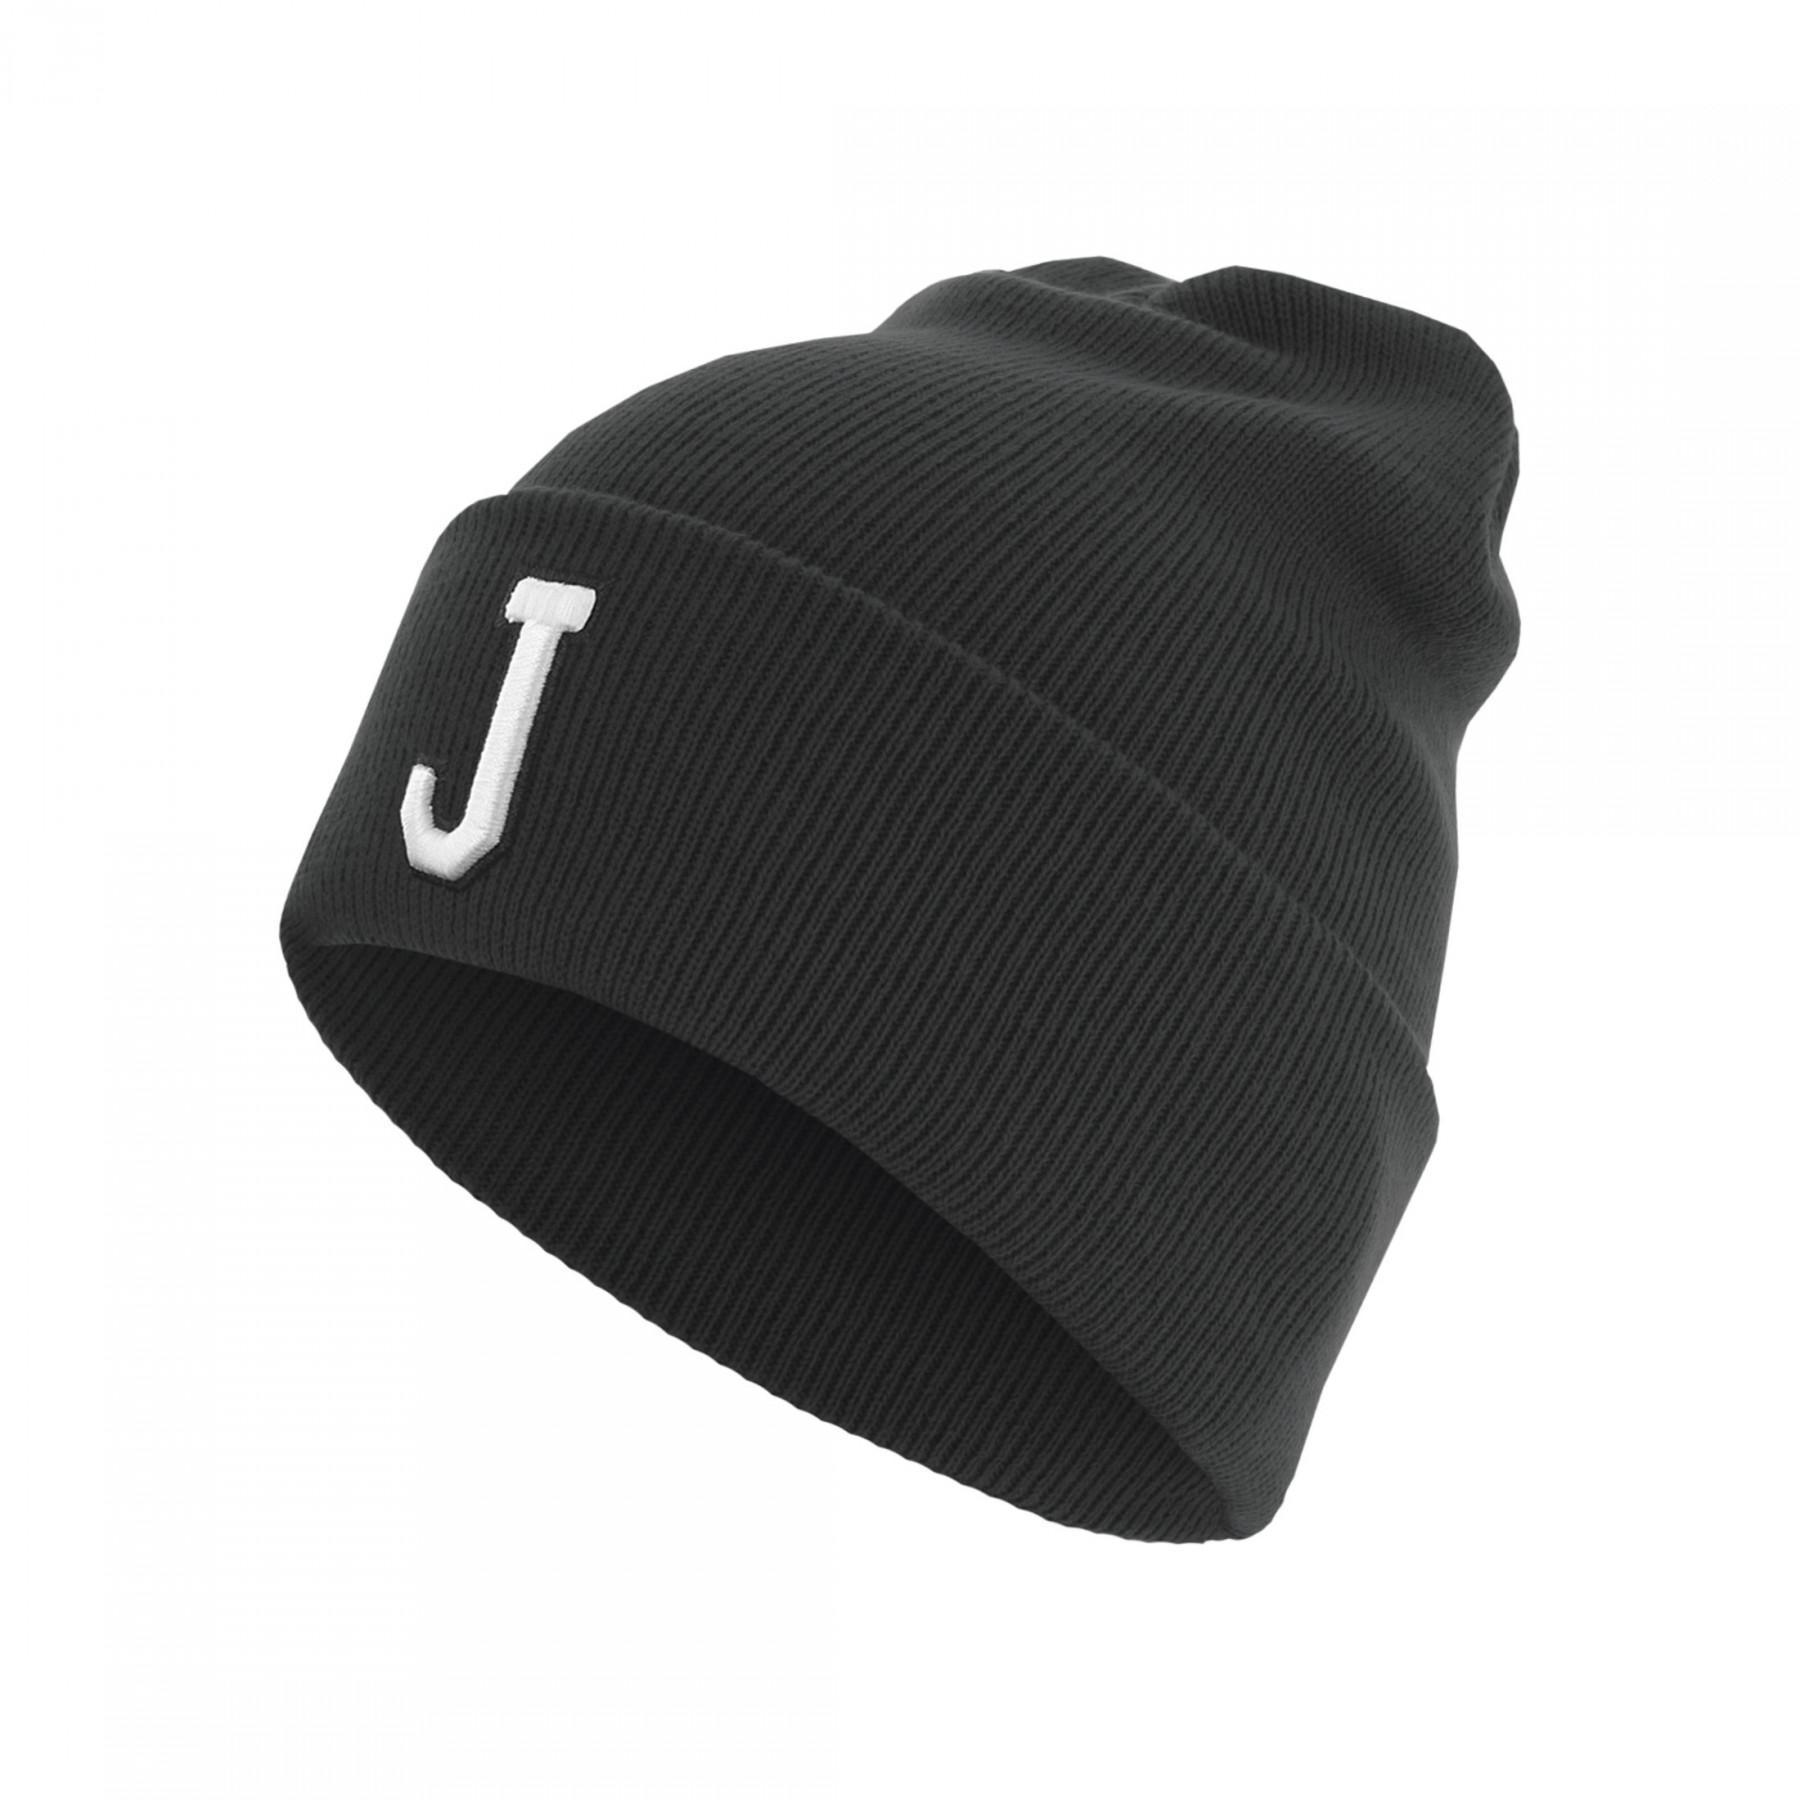 Cap Masterdis letter cuff J - Caps - Headwear - Accessories